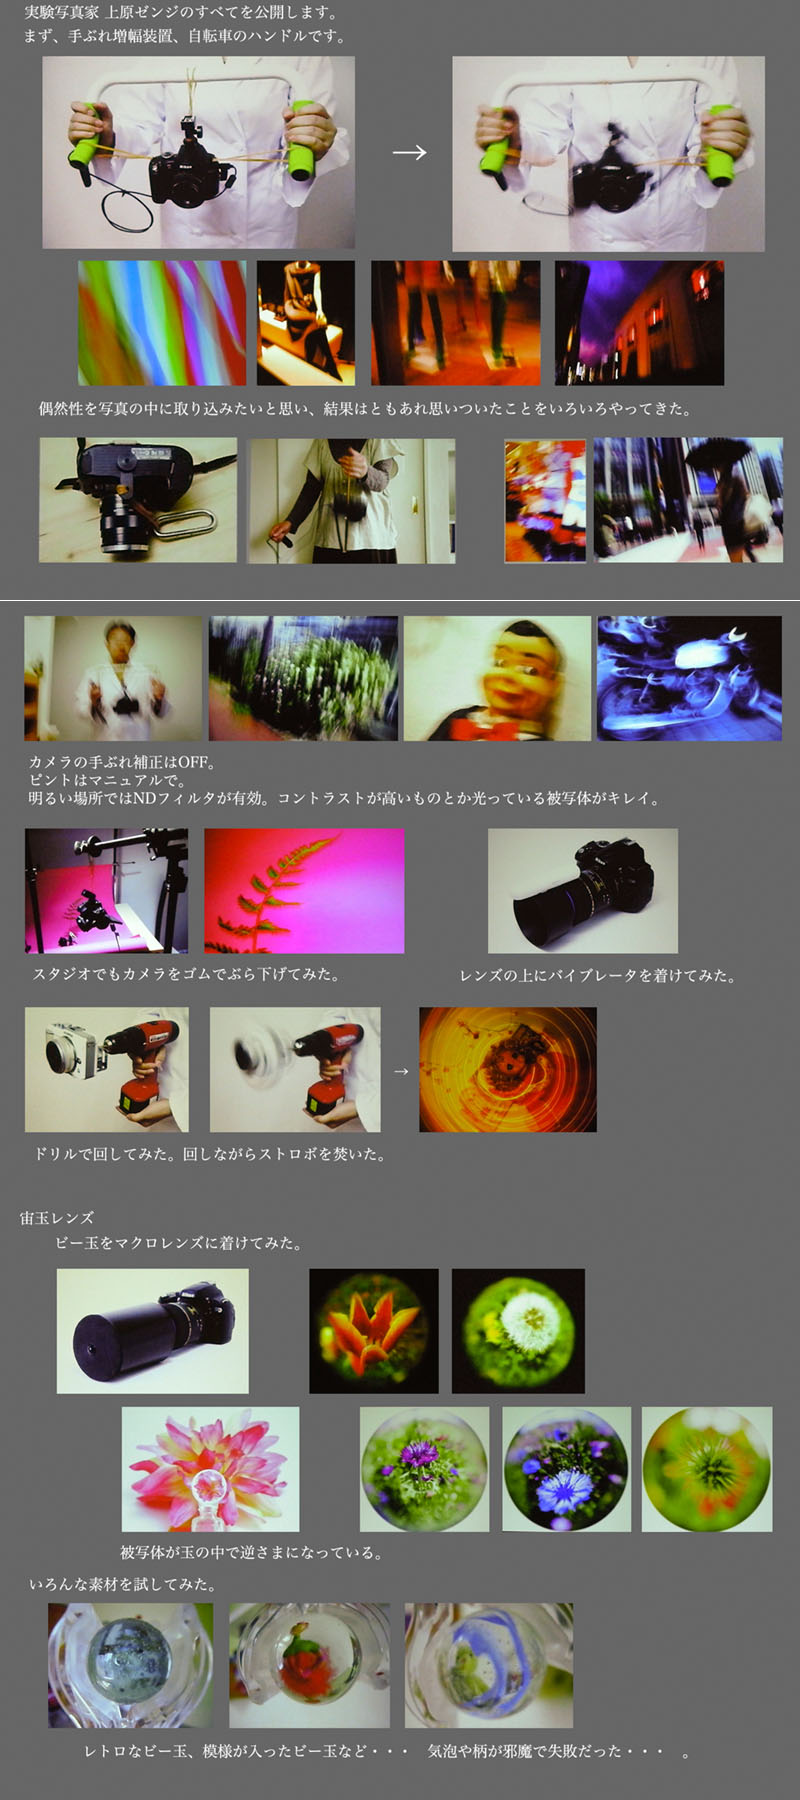 http://denjuku.gr.jp/seminar/_images/zen002.JPG